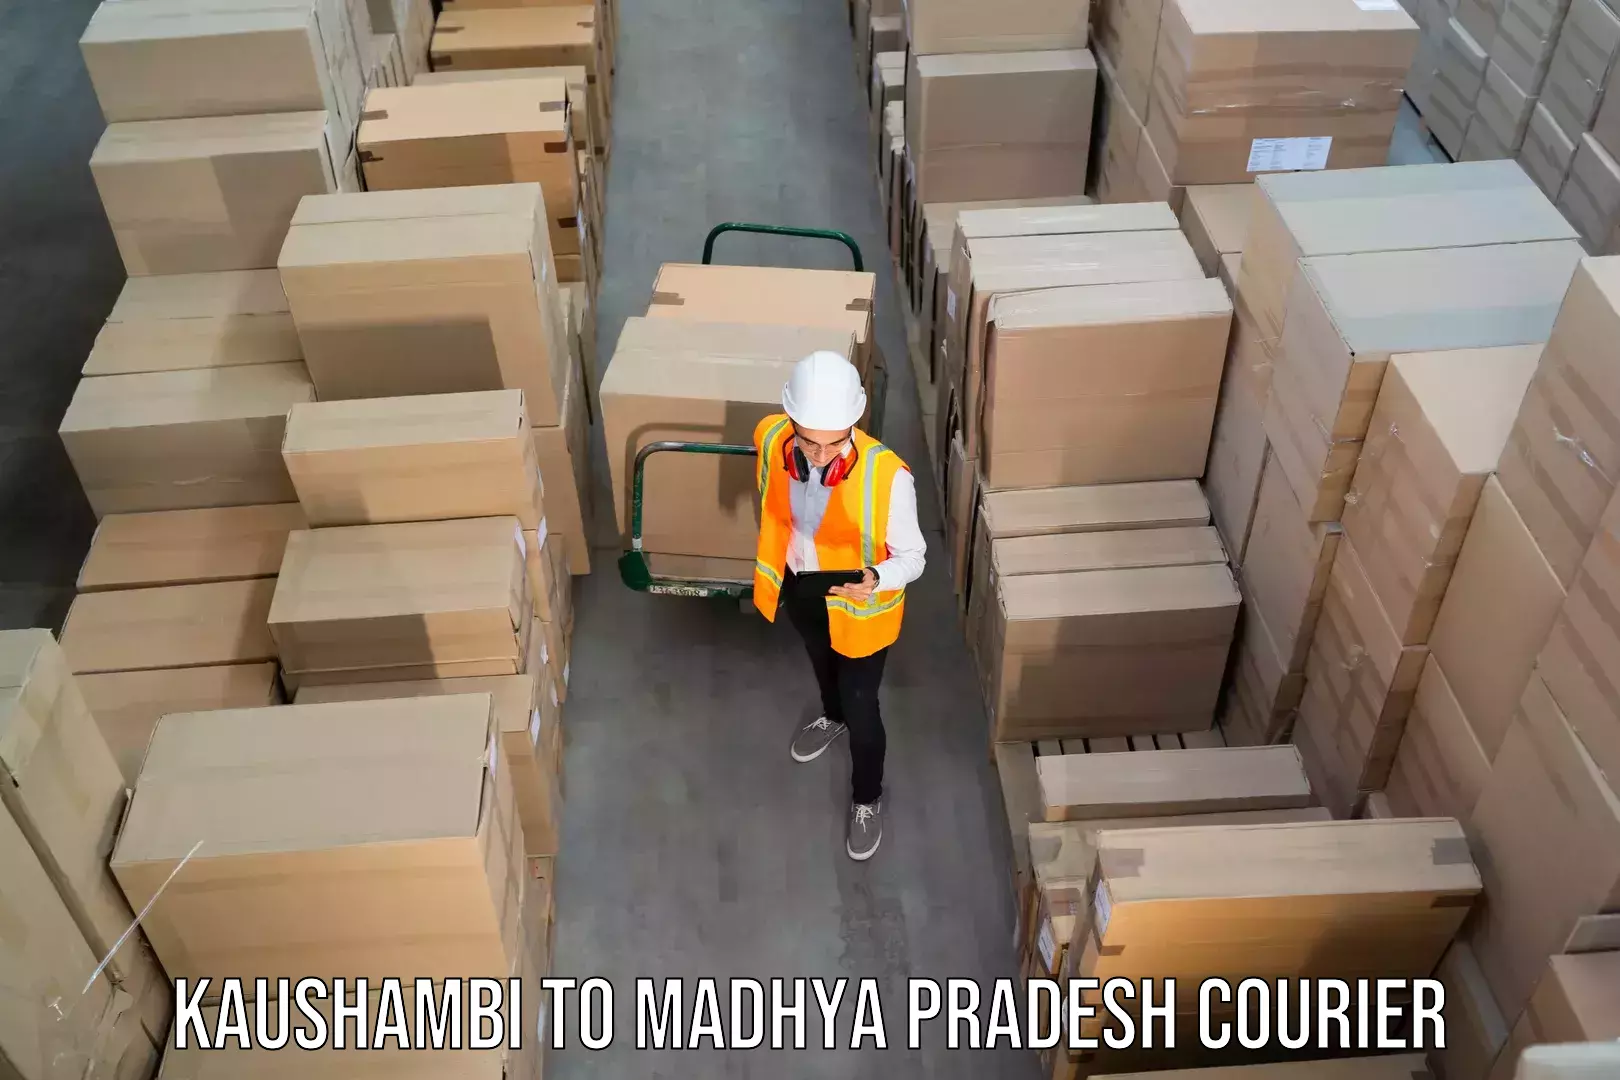 Pharmaceutical courier Kaushambi to Bhopal